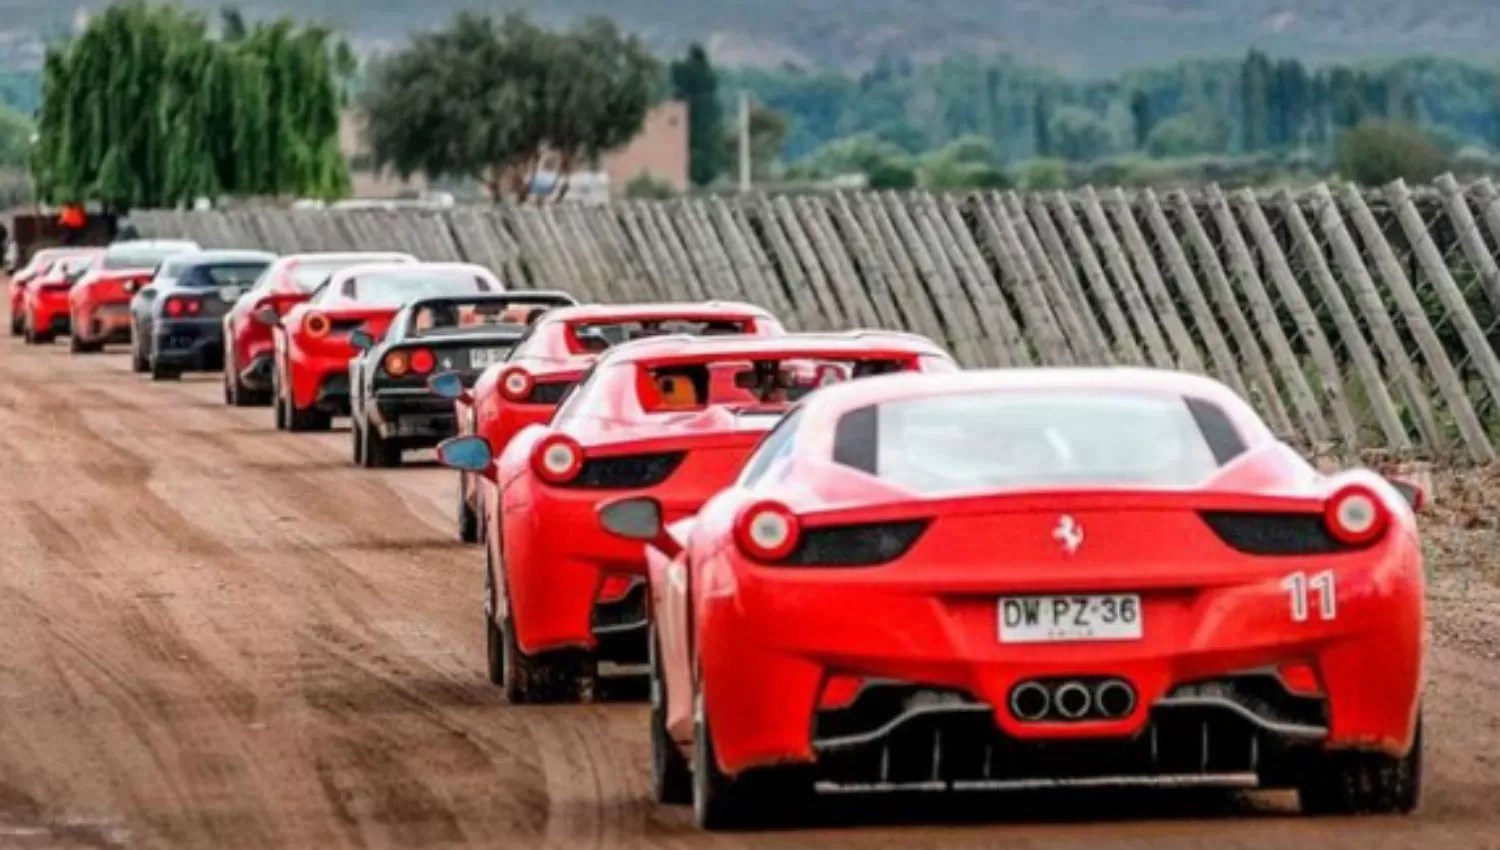 Un lujo: la caravana de Ferraris llega mañana a Tucumán